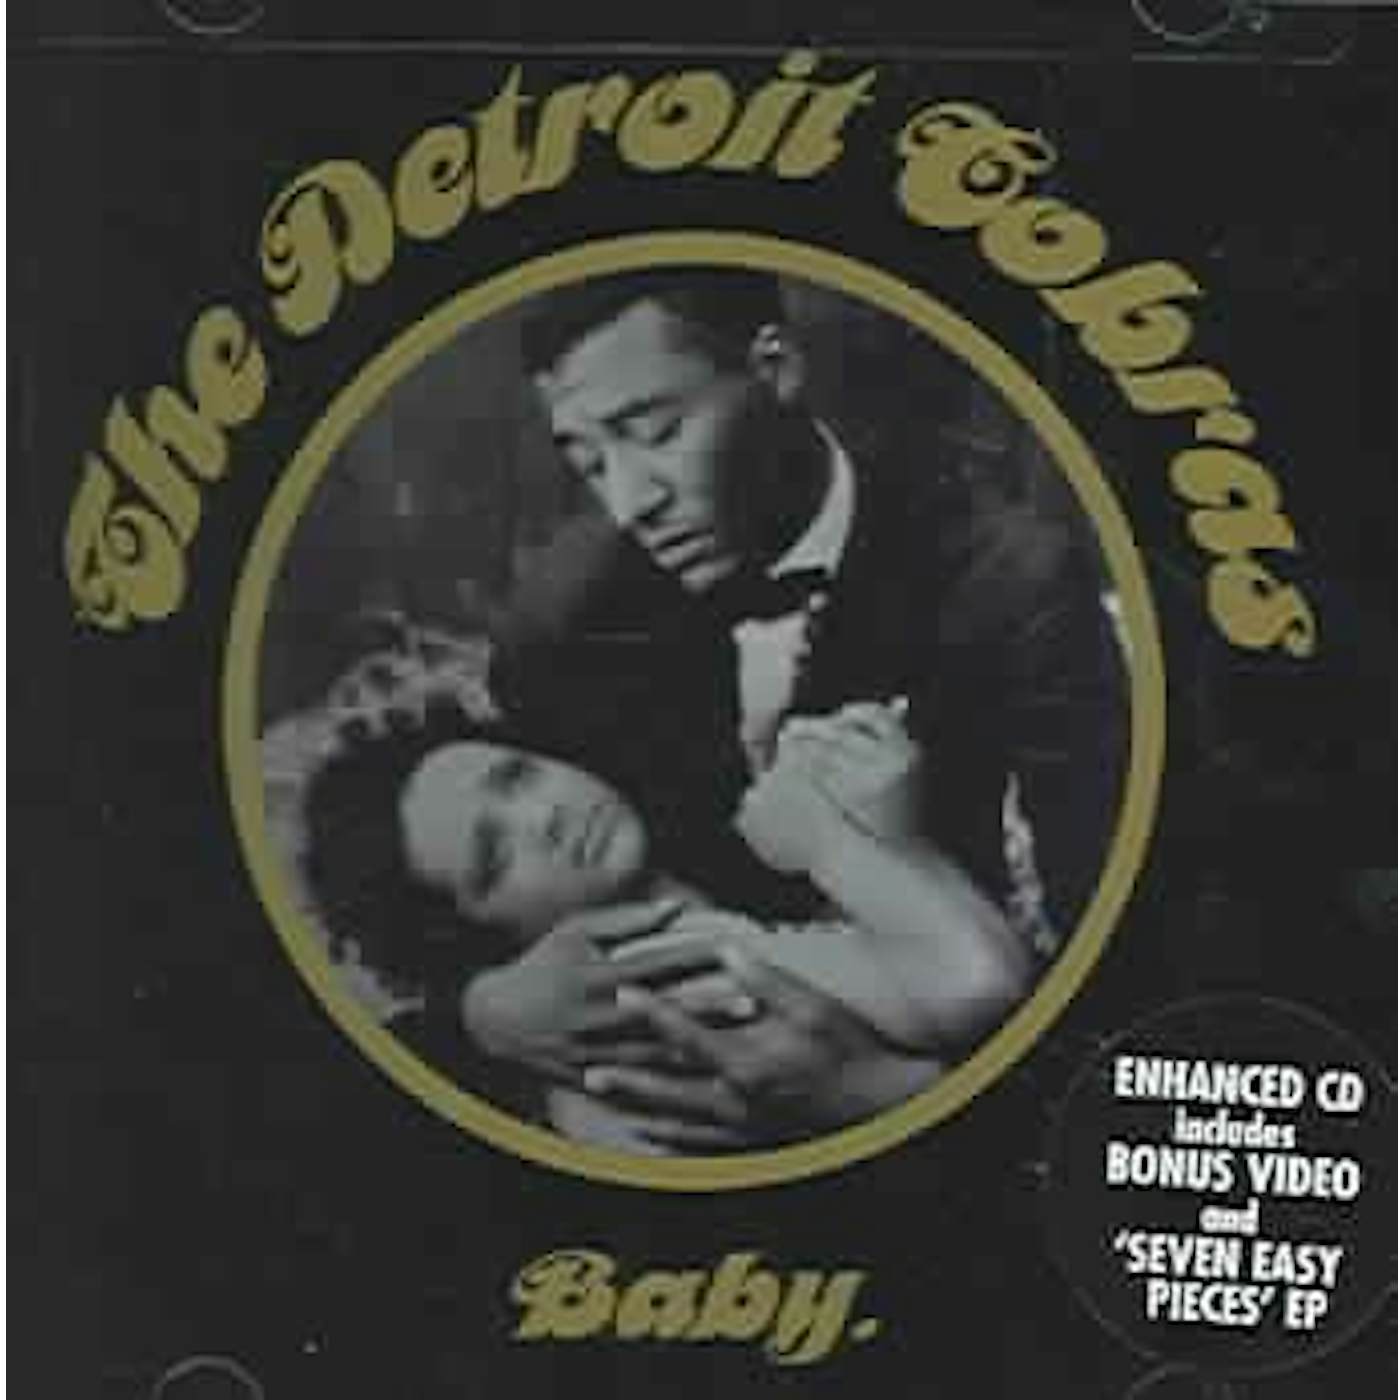 The Detroit Cobras Baby CD